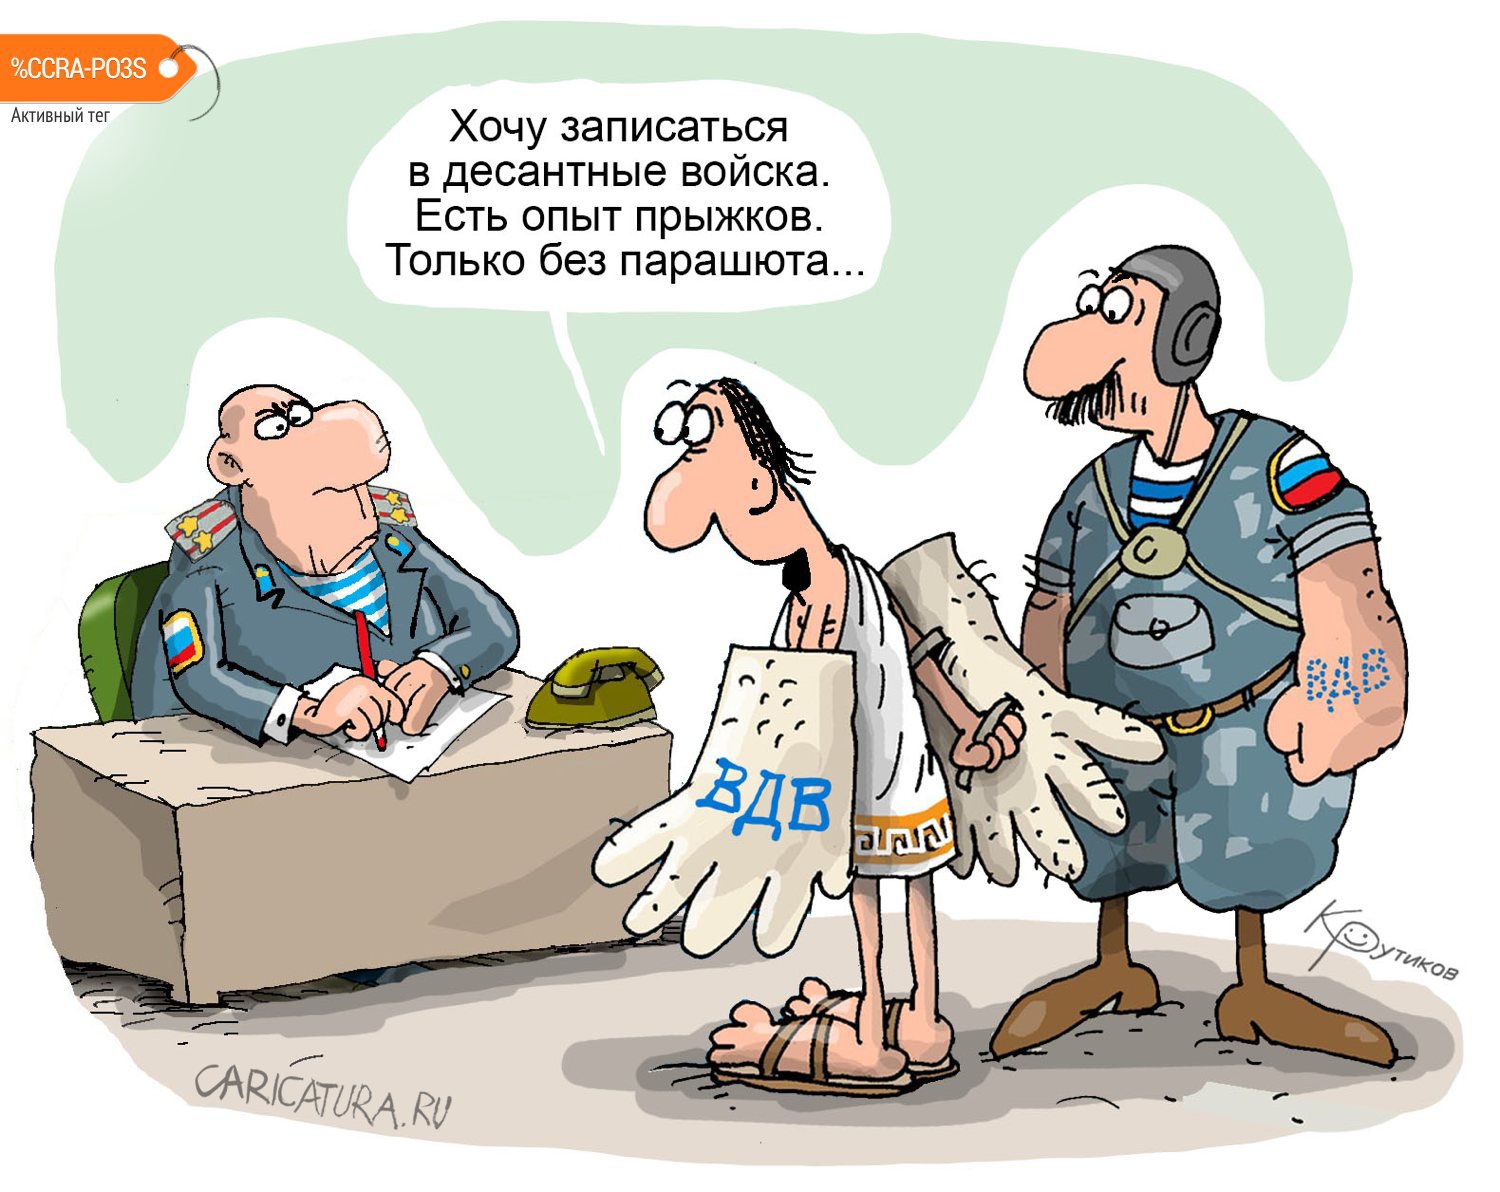 Карикатура "Икар и ВДВ", Николай Крутиков